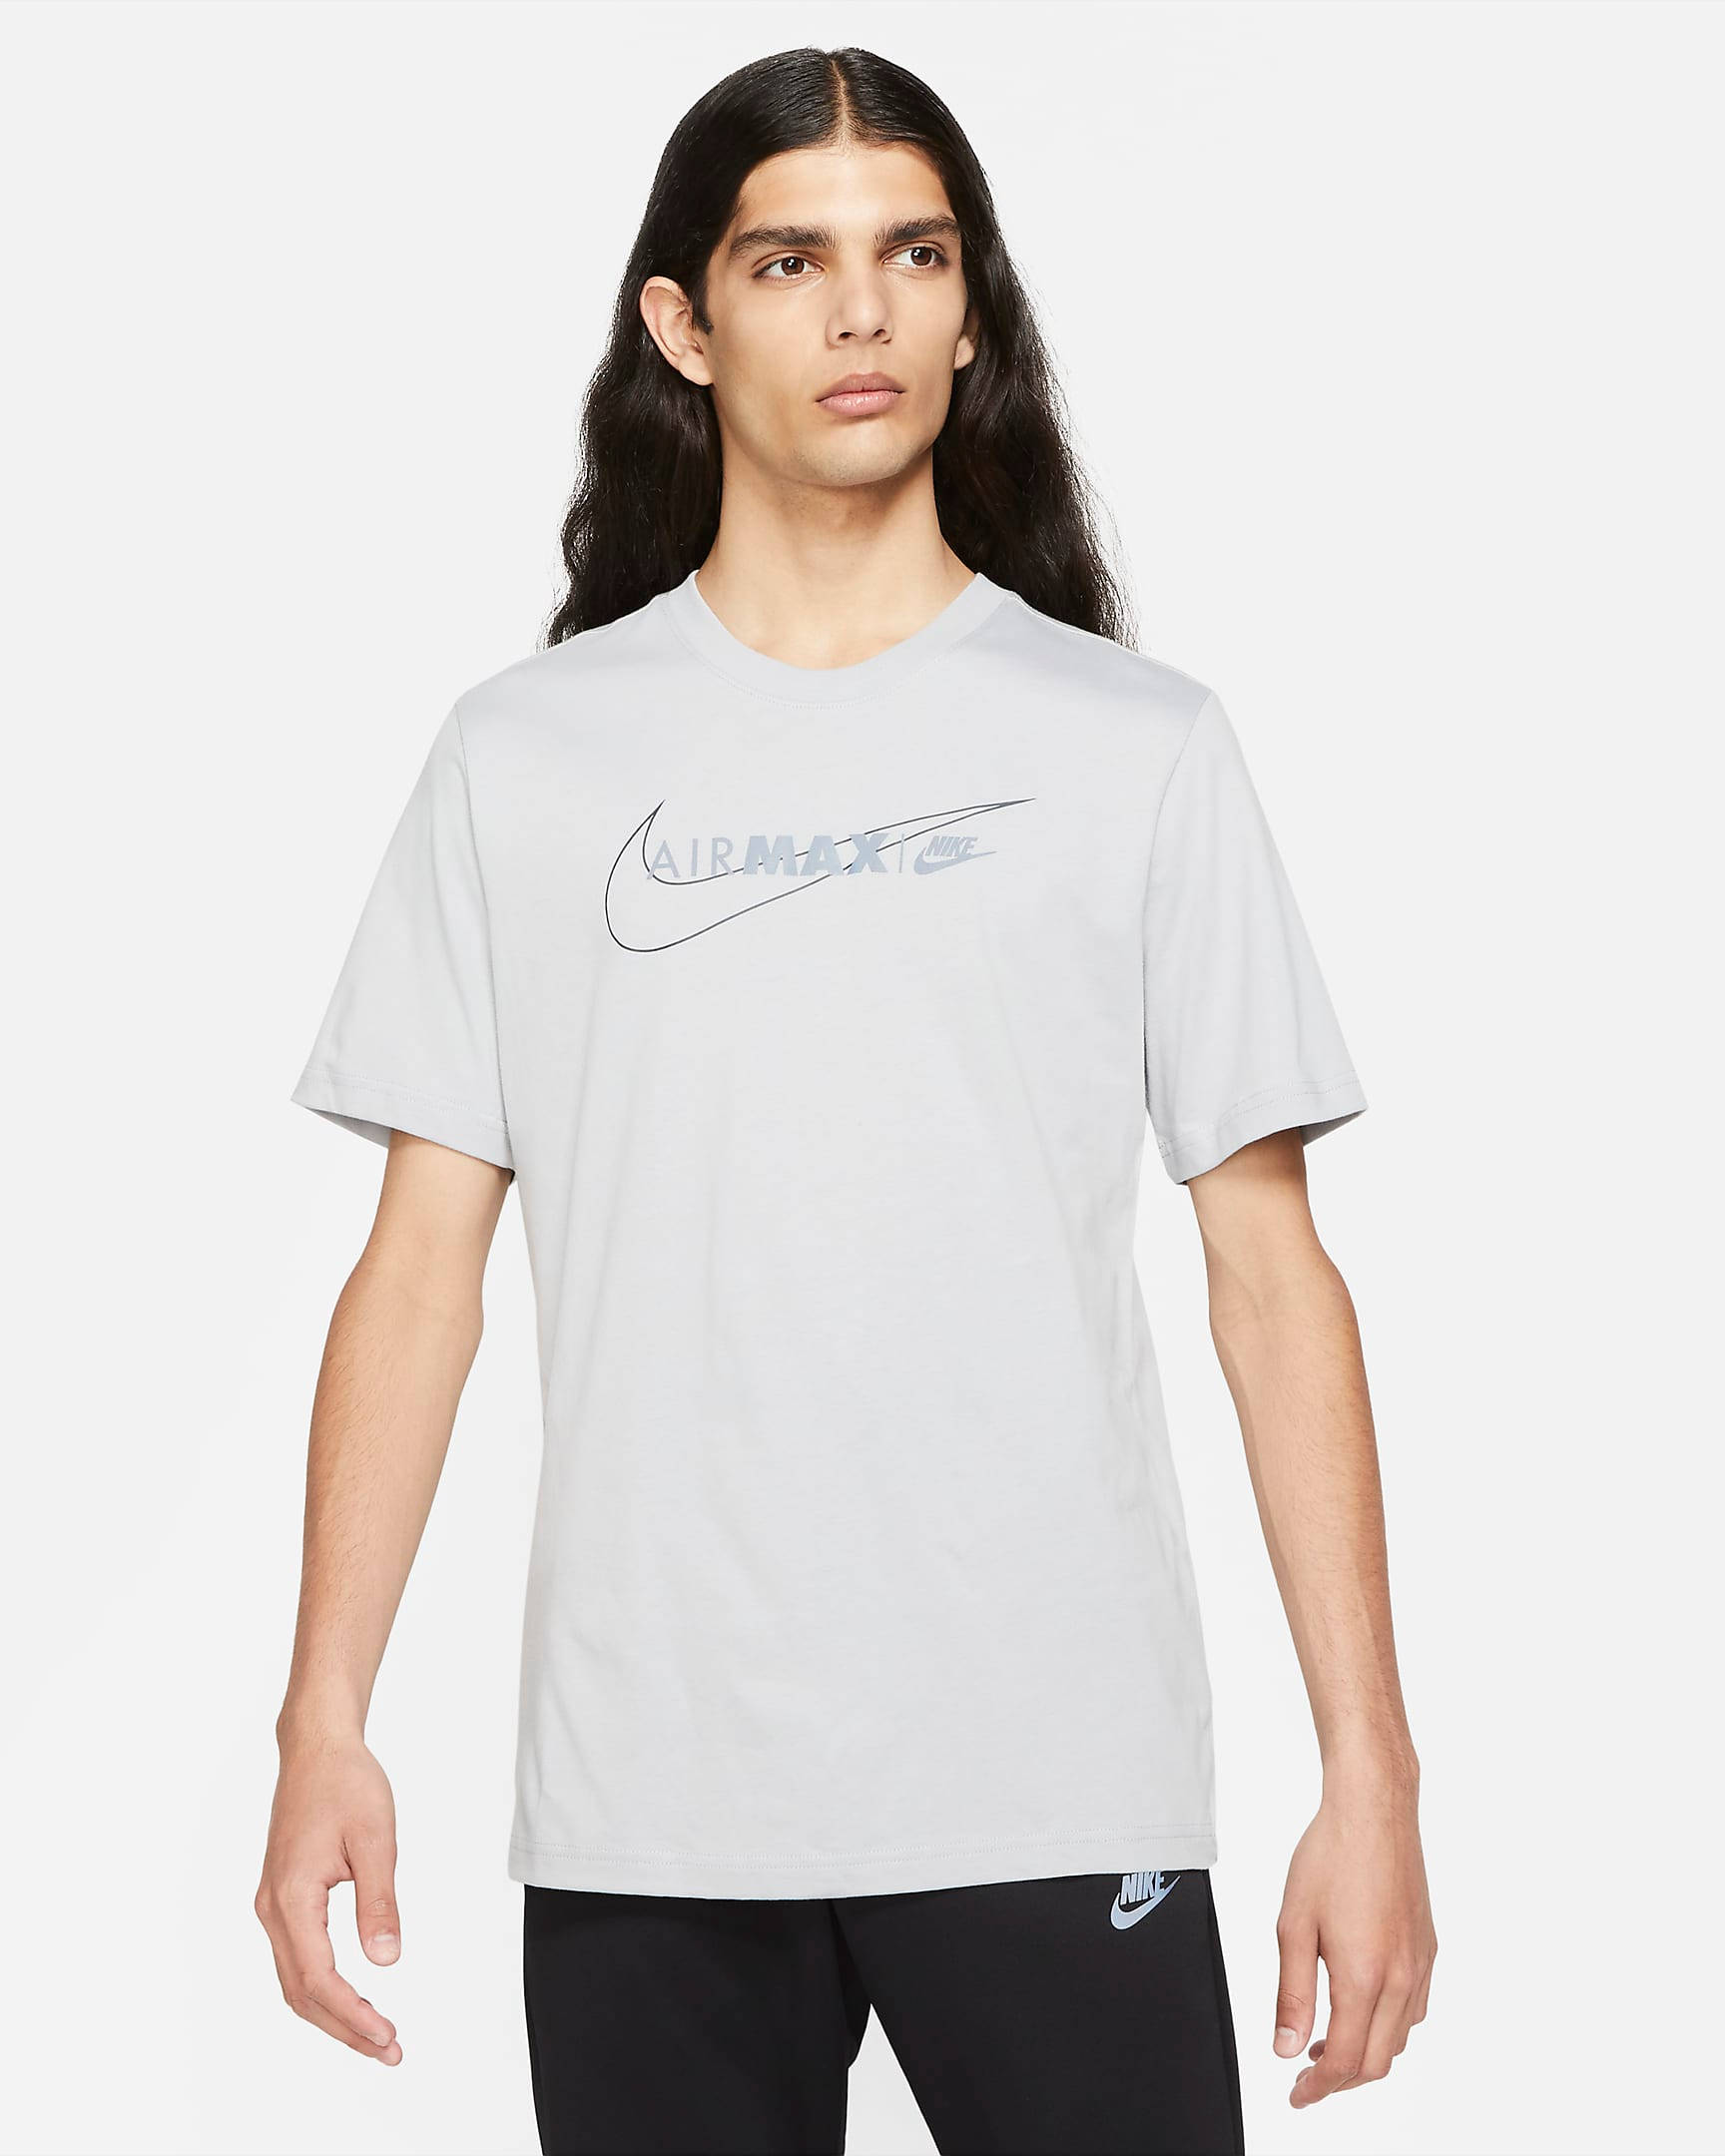 Nike Air Max T-Shirt - Wolf Grey | The Sole Supplier